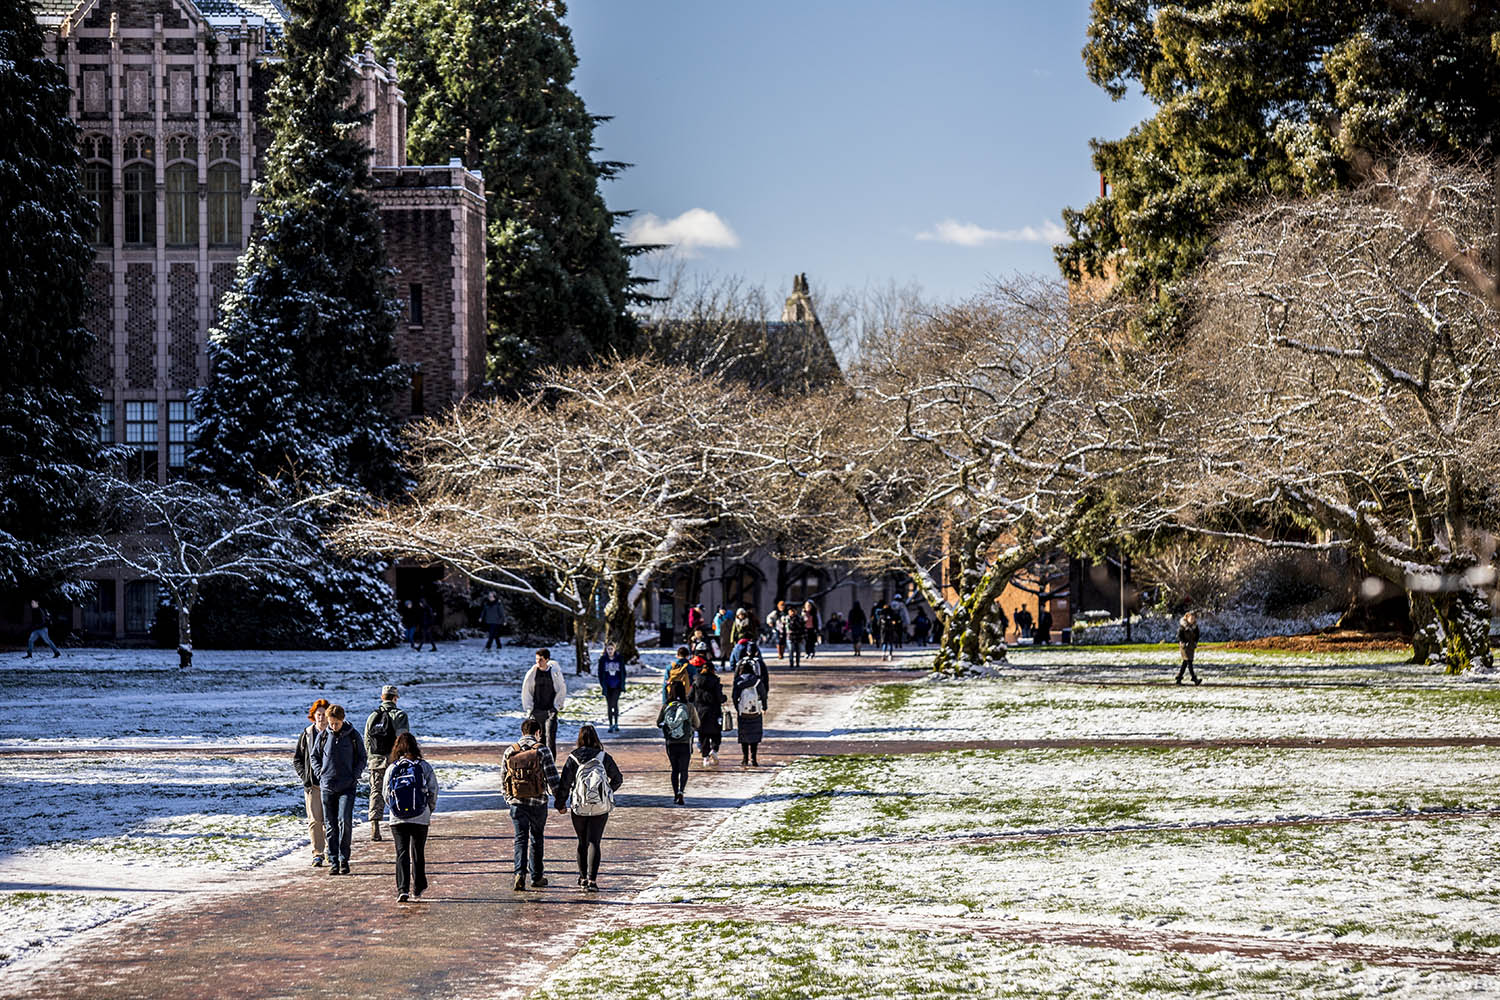 A snowy field on a sunny day on the University